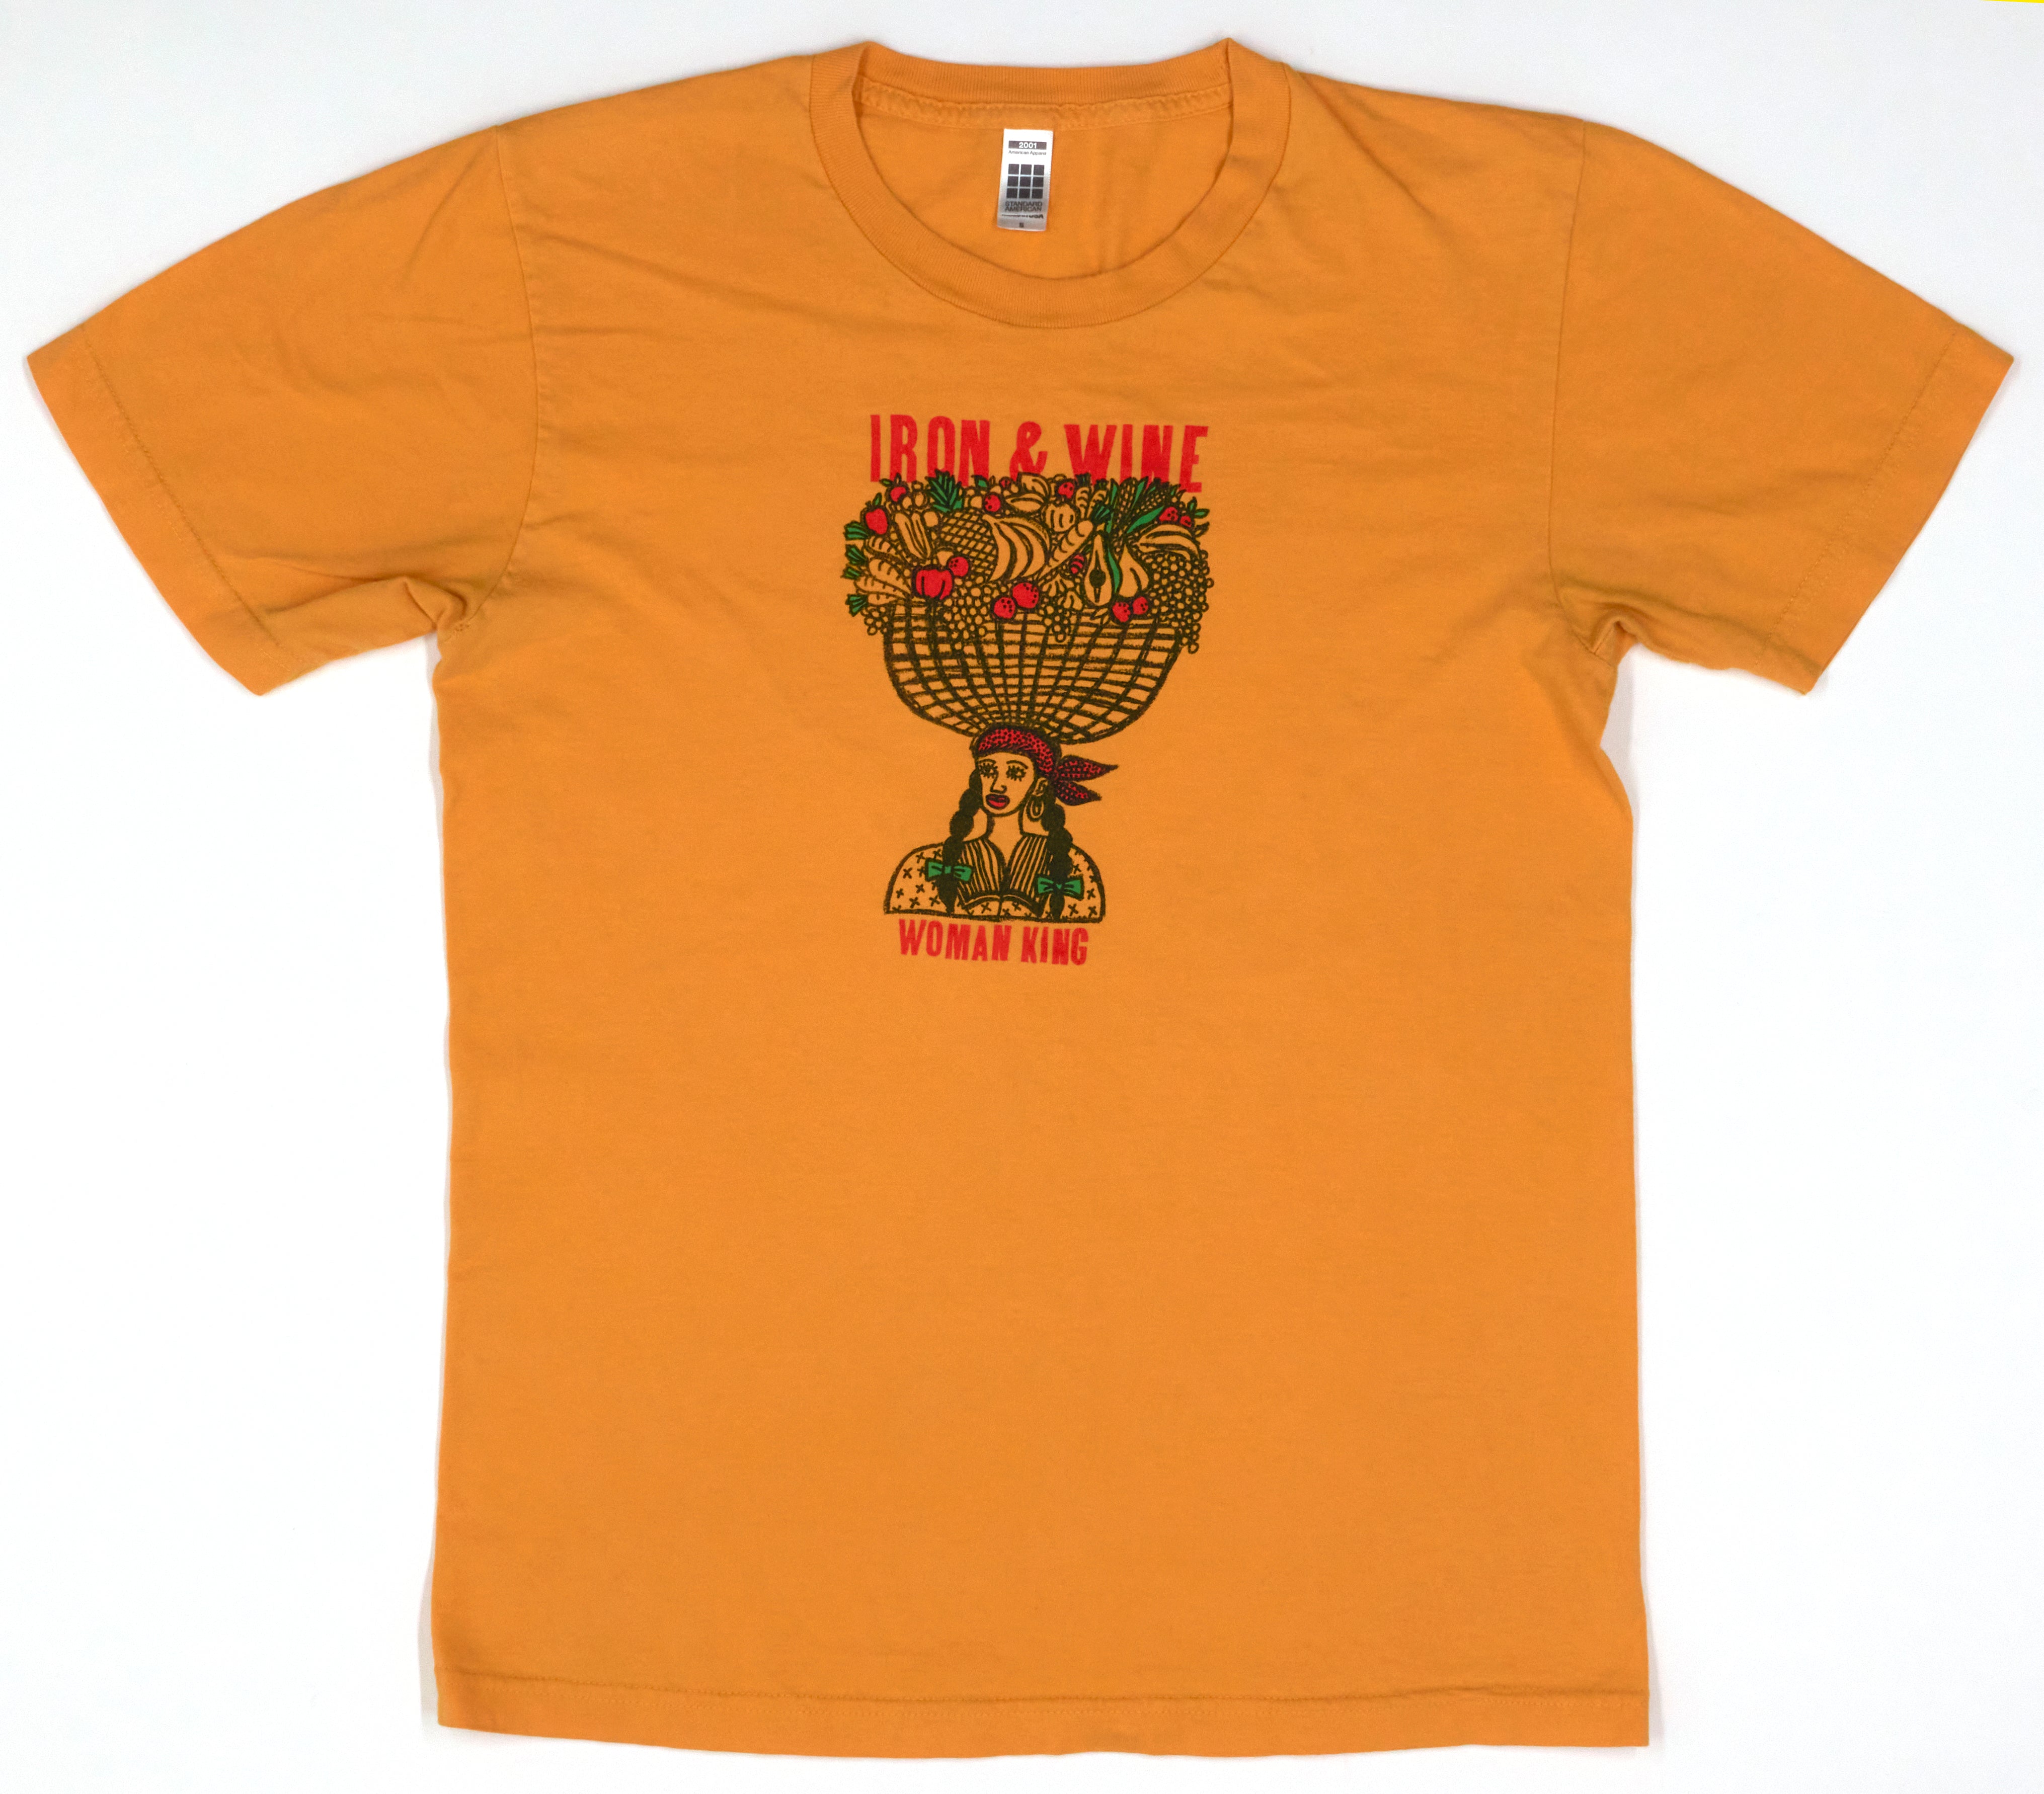 Iron & Wine - Woman King 2005 Tour Shirt Size Small